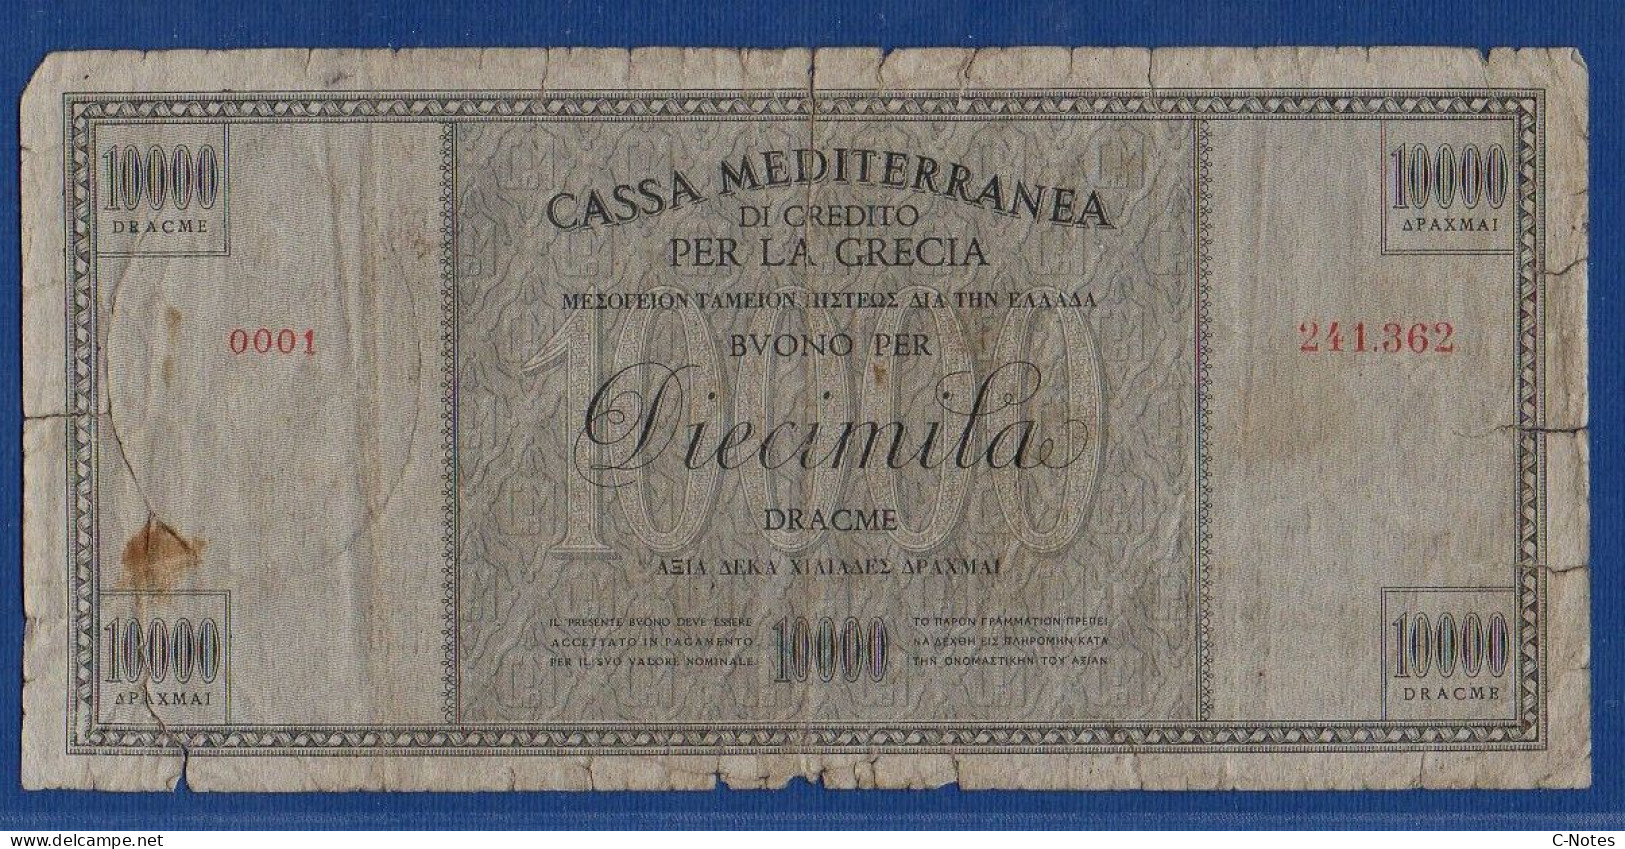 GREECE - Cassa Mediterranea Di Credito - P.M8 – 10000 DRACME ND 1941 - CIRCULATED - SERIE 0001 241.362 - Italiaanse Egeïsche Bezetting